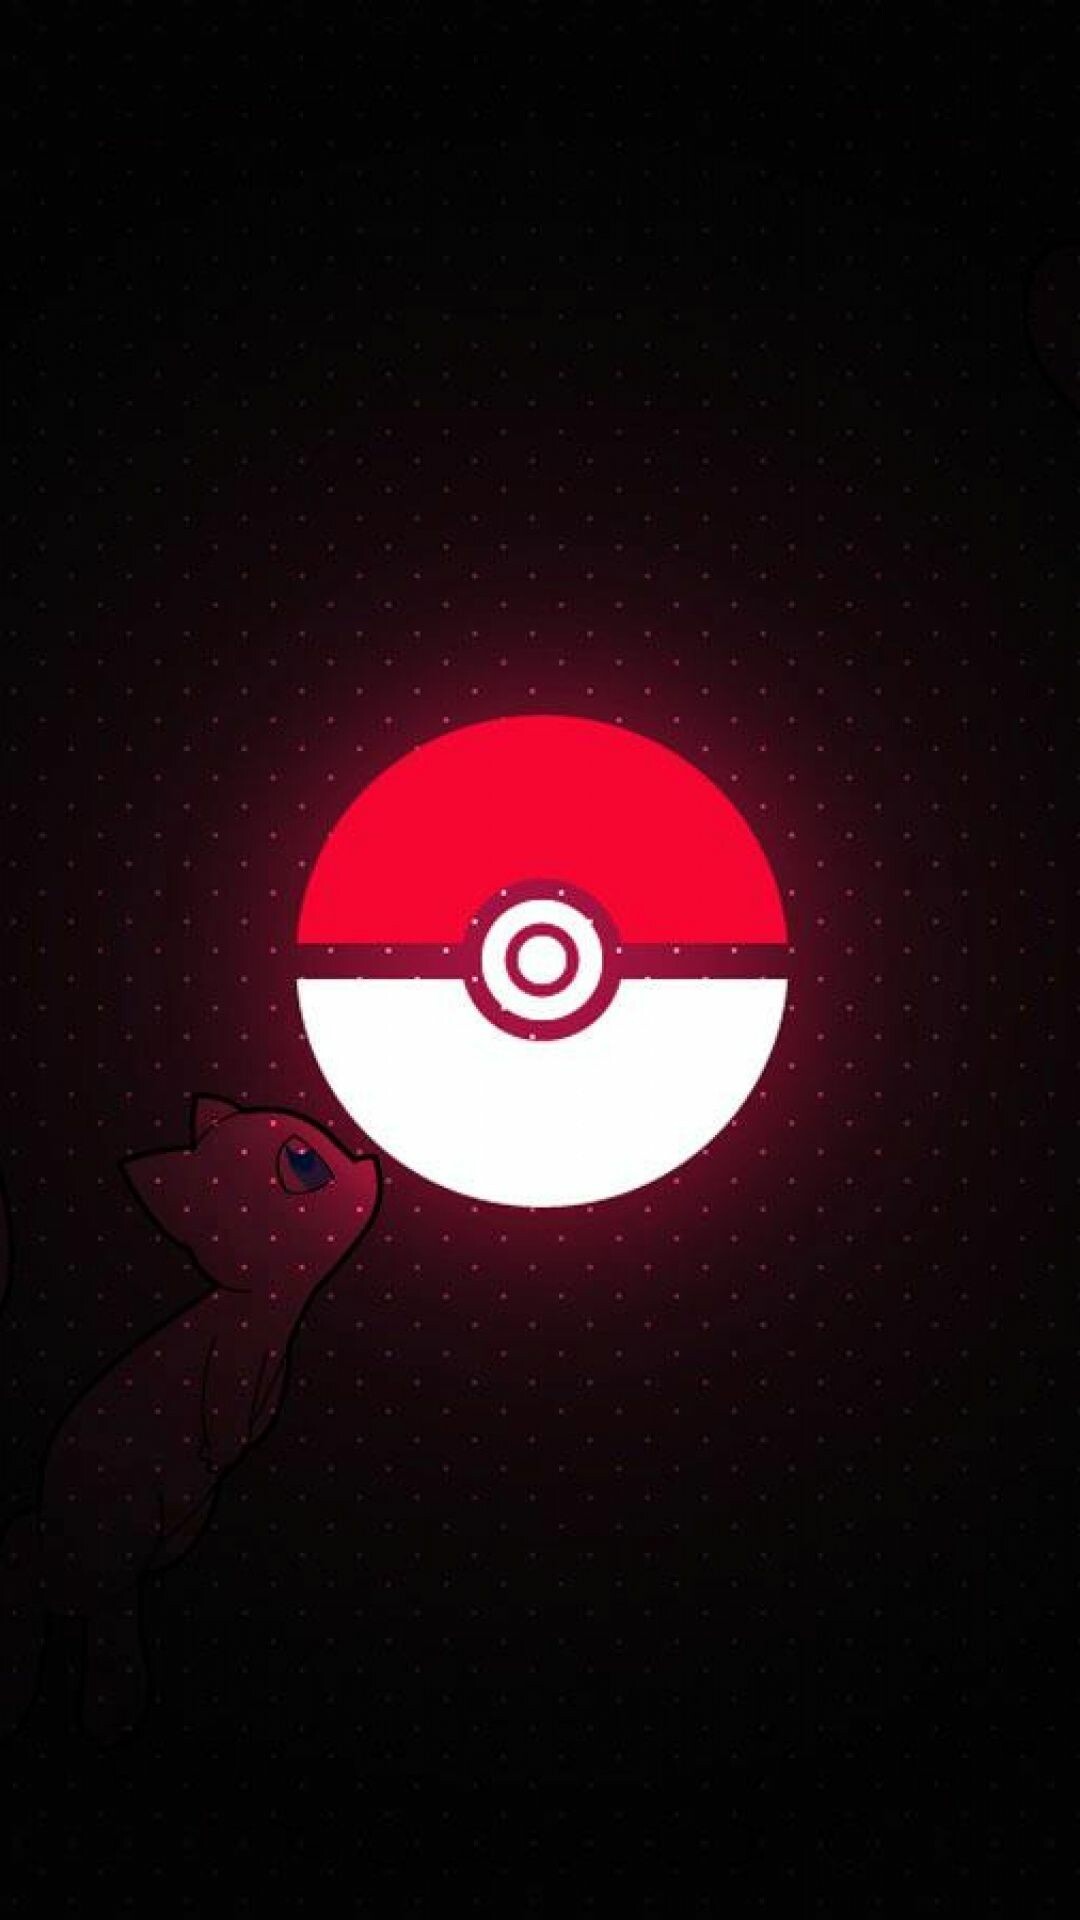 Pokemon logo wallpapers, Recognizable brand, Iconic design, Fan favorites, 1080x1920 Full HD Phone